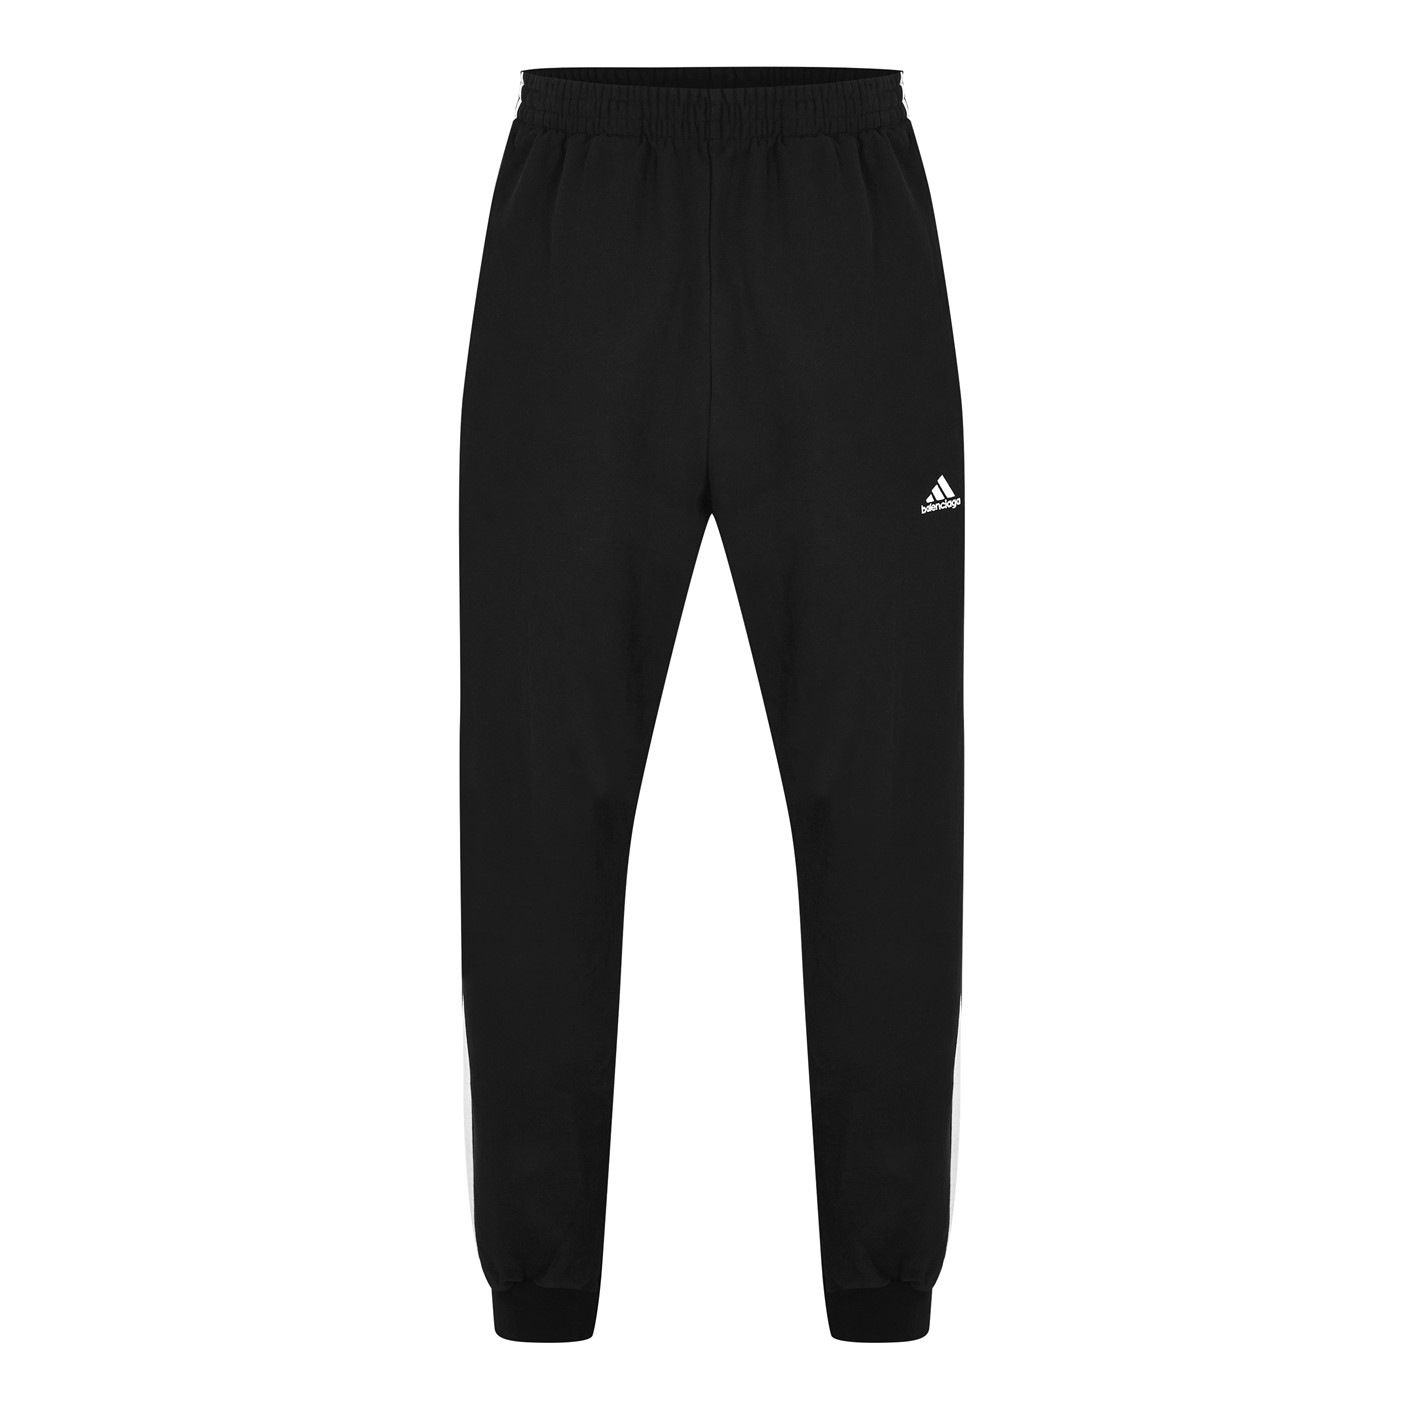 Balenciaga X Adidas Tapered Sweatpants in Black